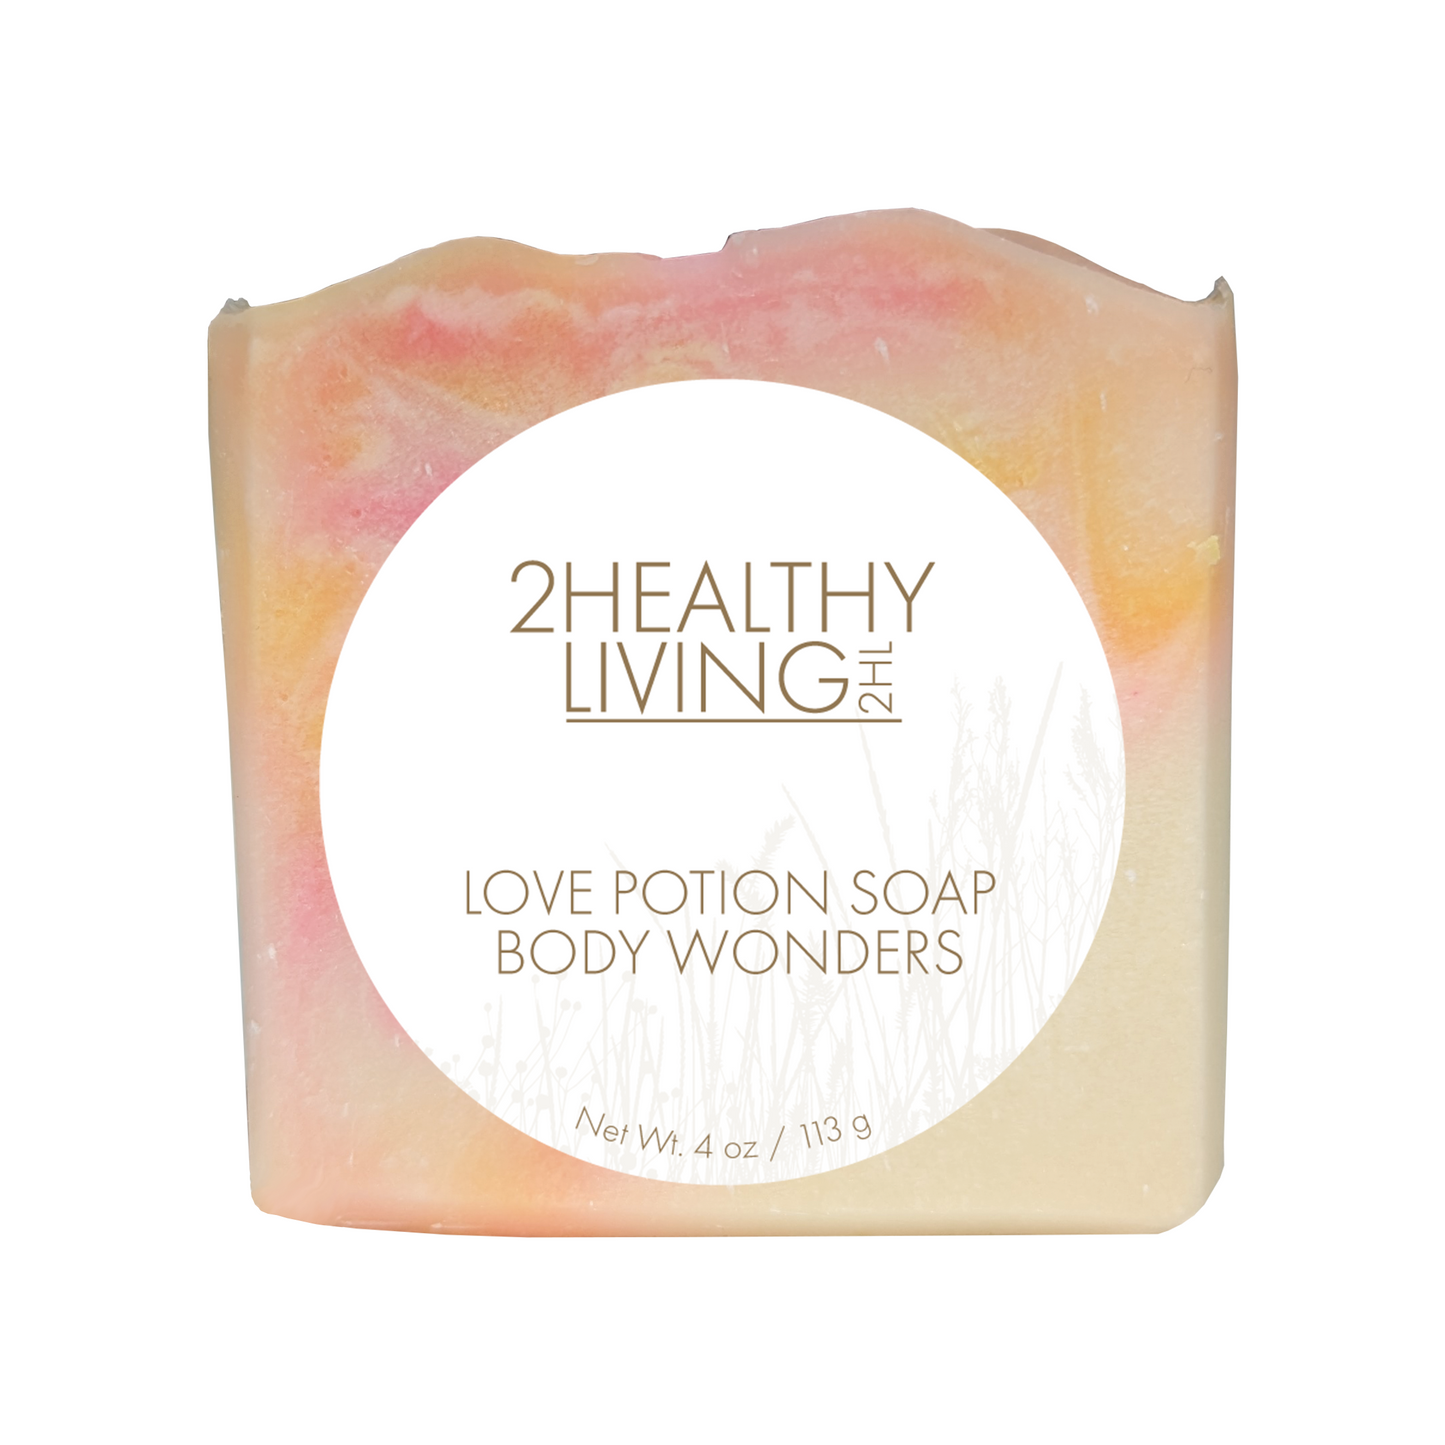 Love Potion Soap Body Wonders